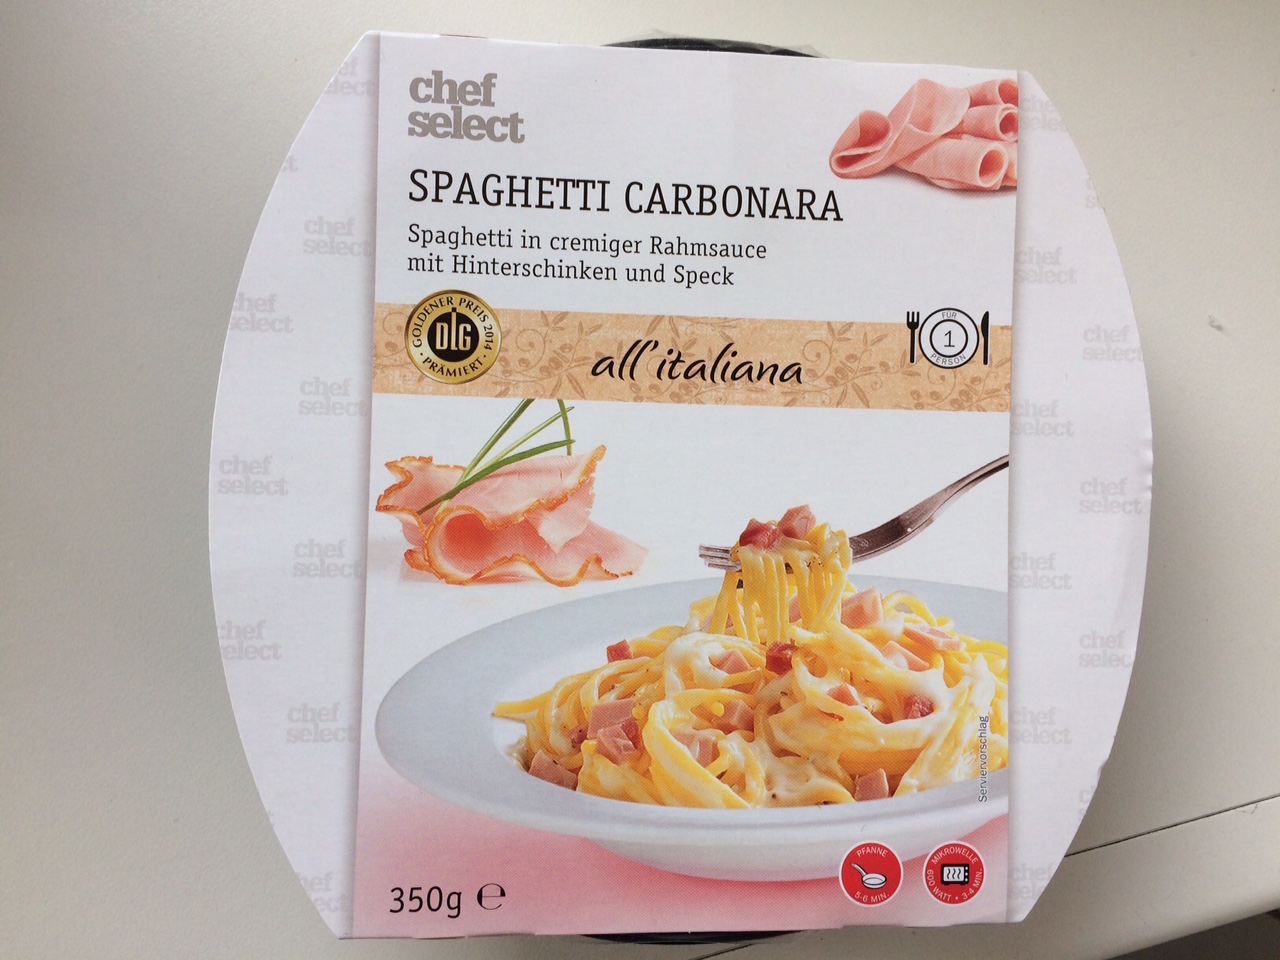 "Spaghetti Carbonara"